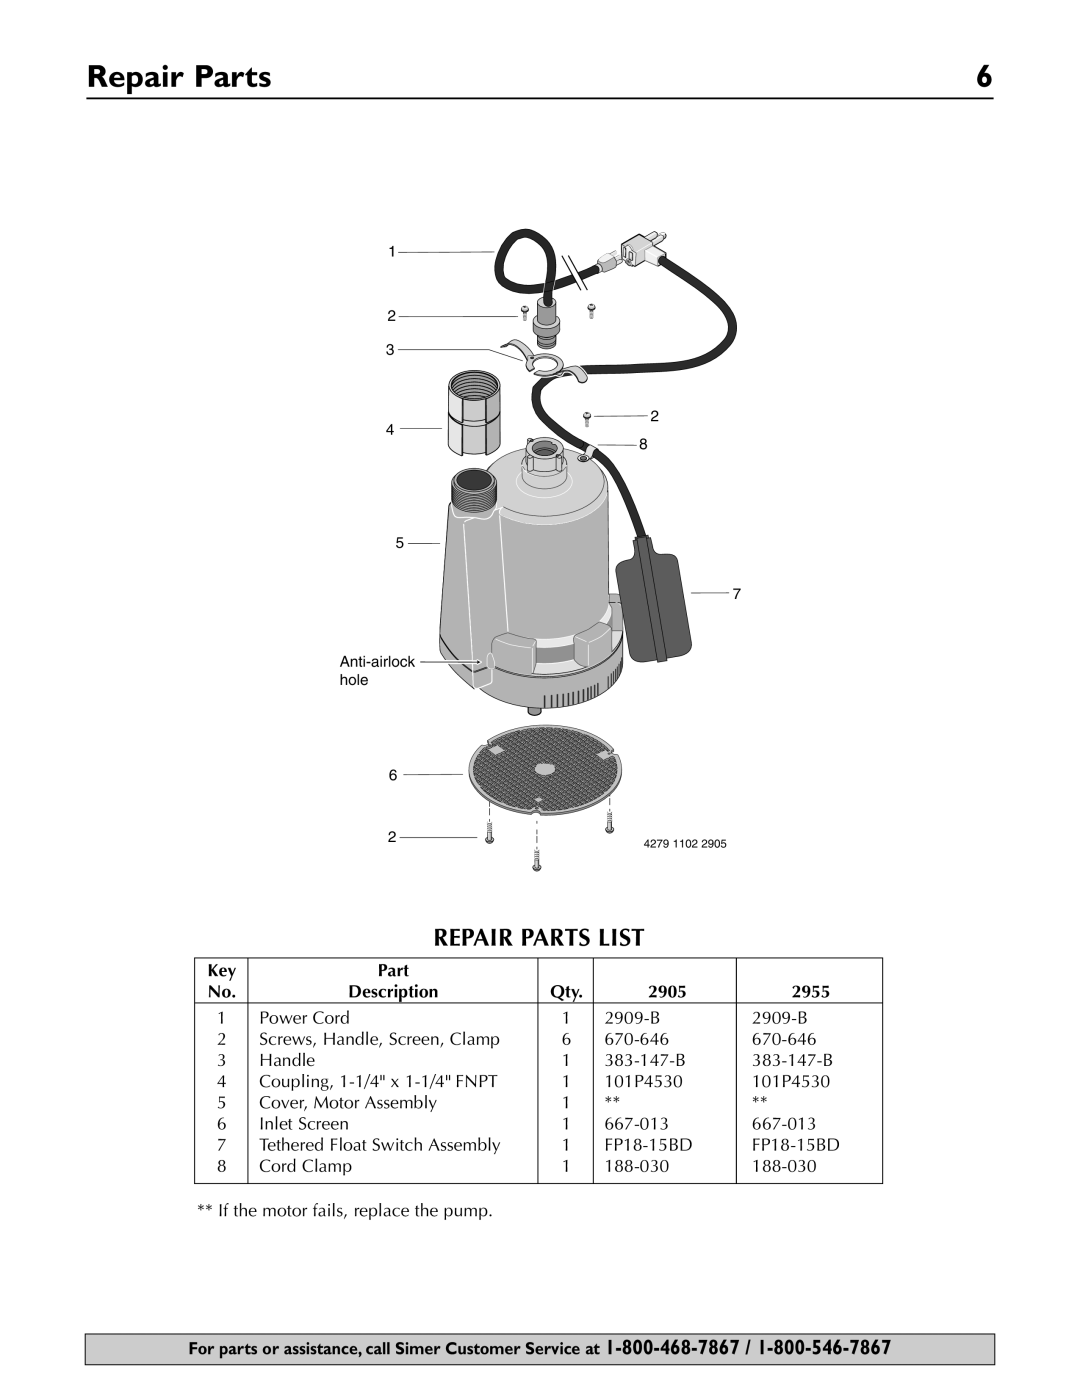 Simer Pumps 2955 owner manual Repair Parts List, Description, 2905 